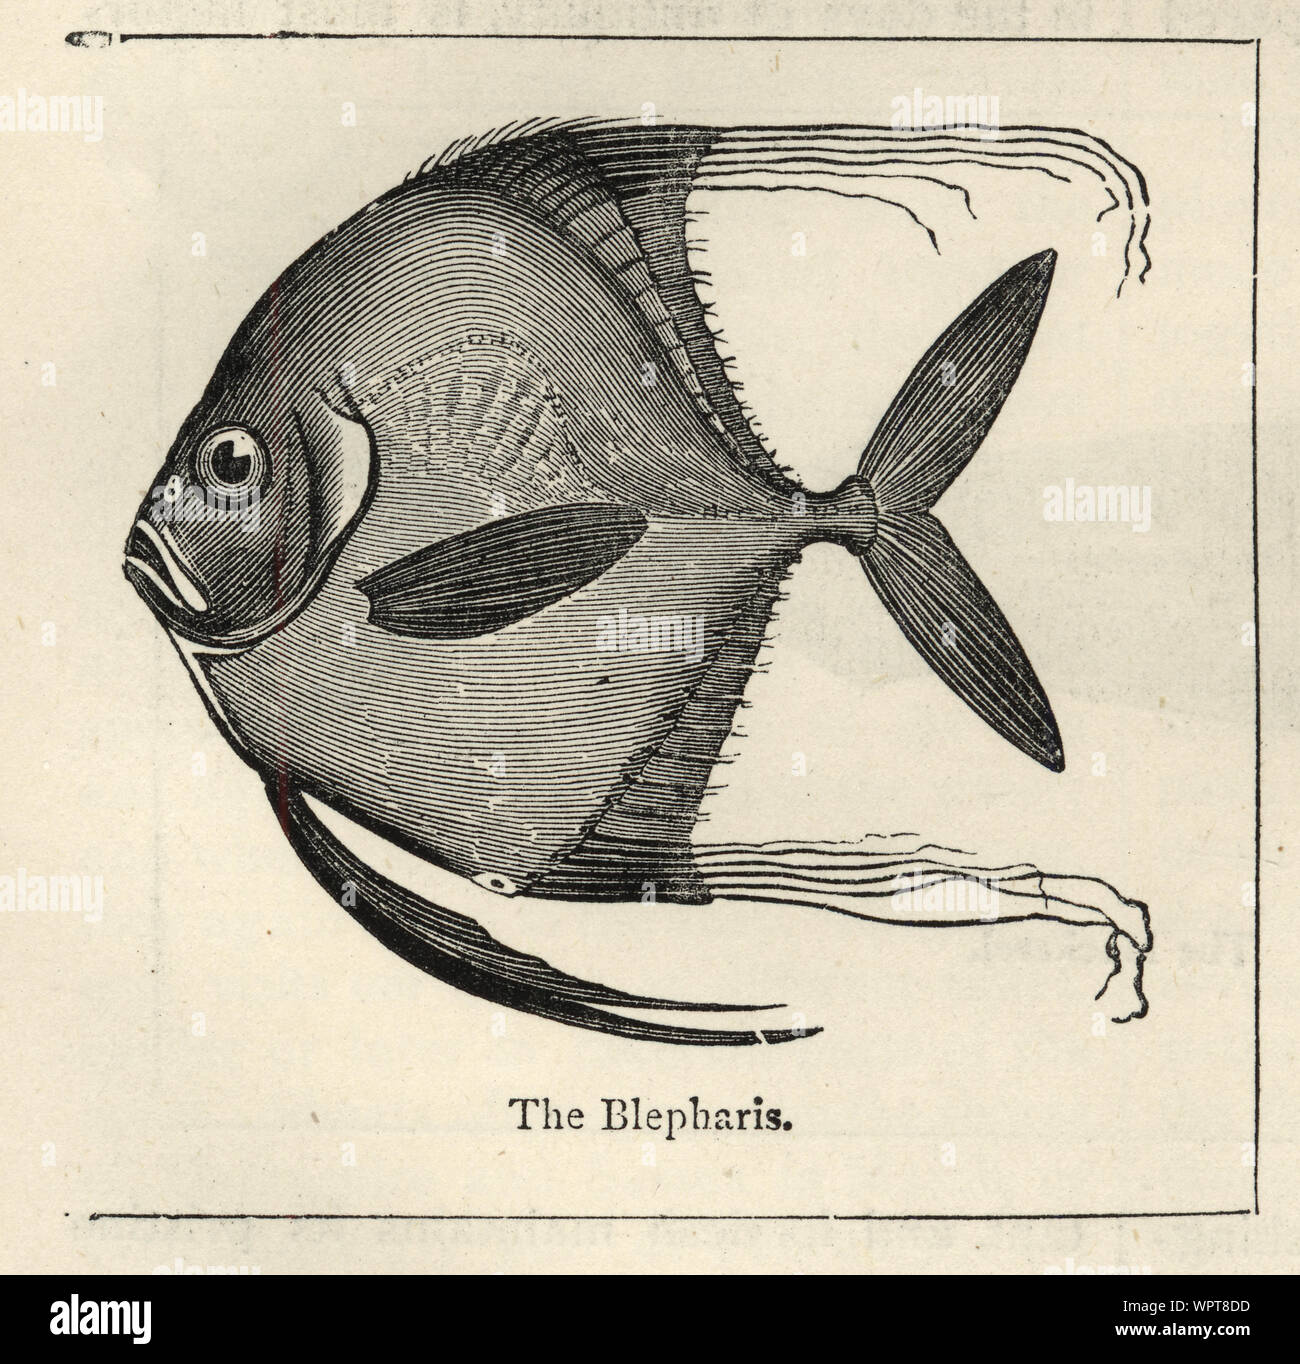 Blepharis Fish 19th century engraving Stock Photo